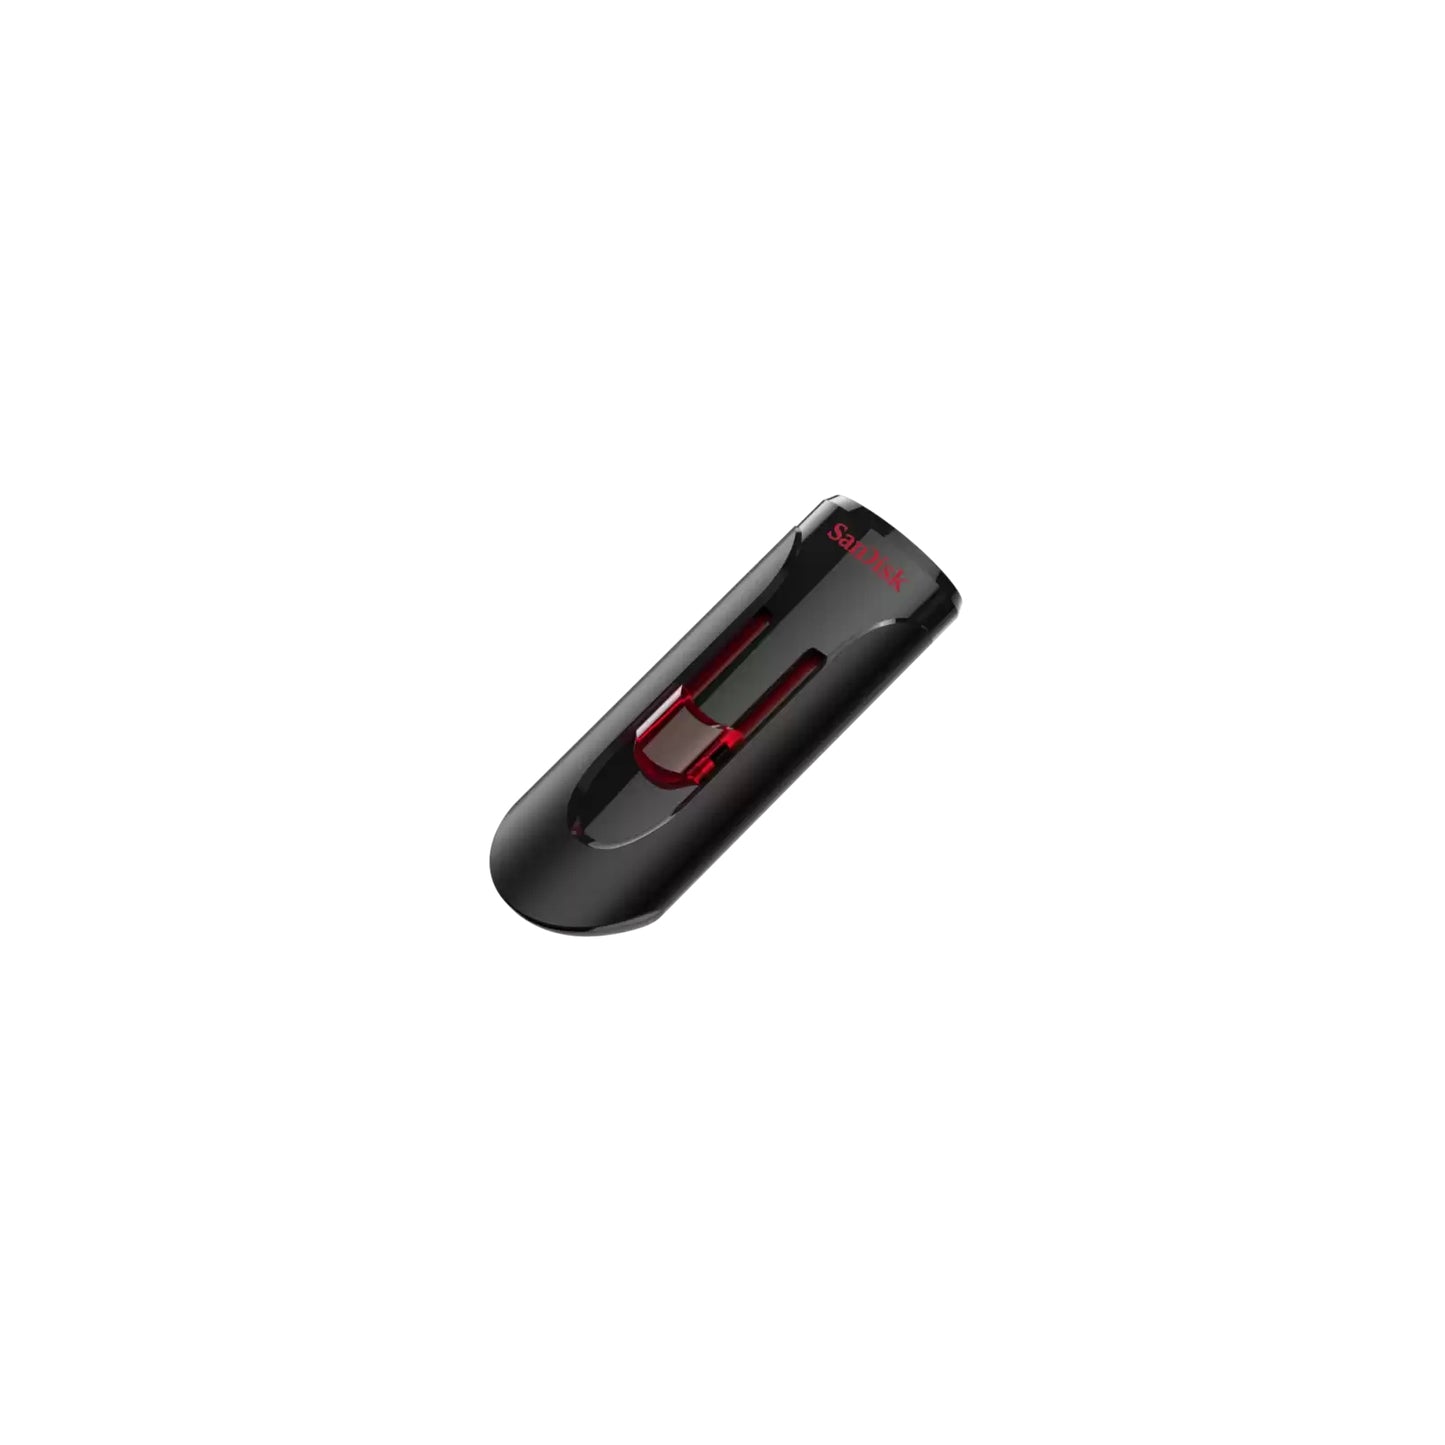 SanDisk Cruzer Glide 256GB USB 3.0 Flash Drive Memory Stick Pen Drive PC MAC